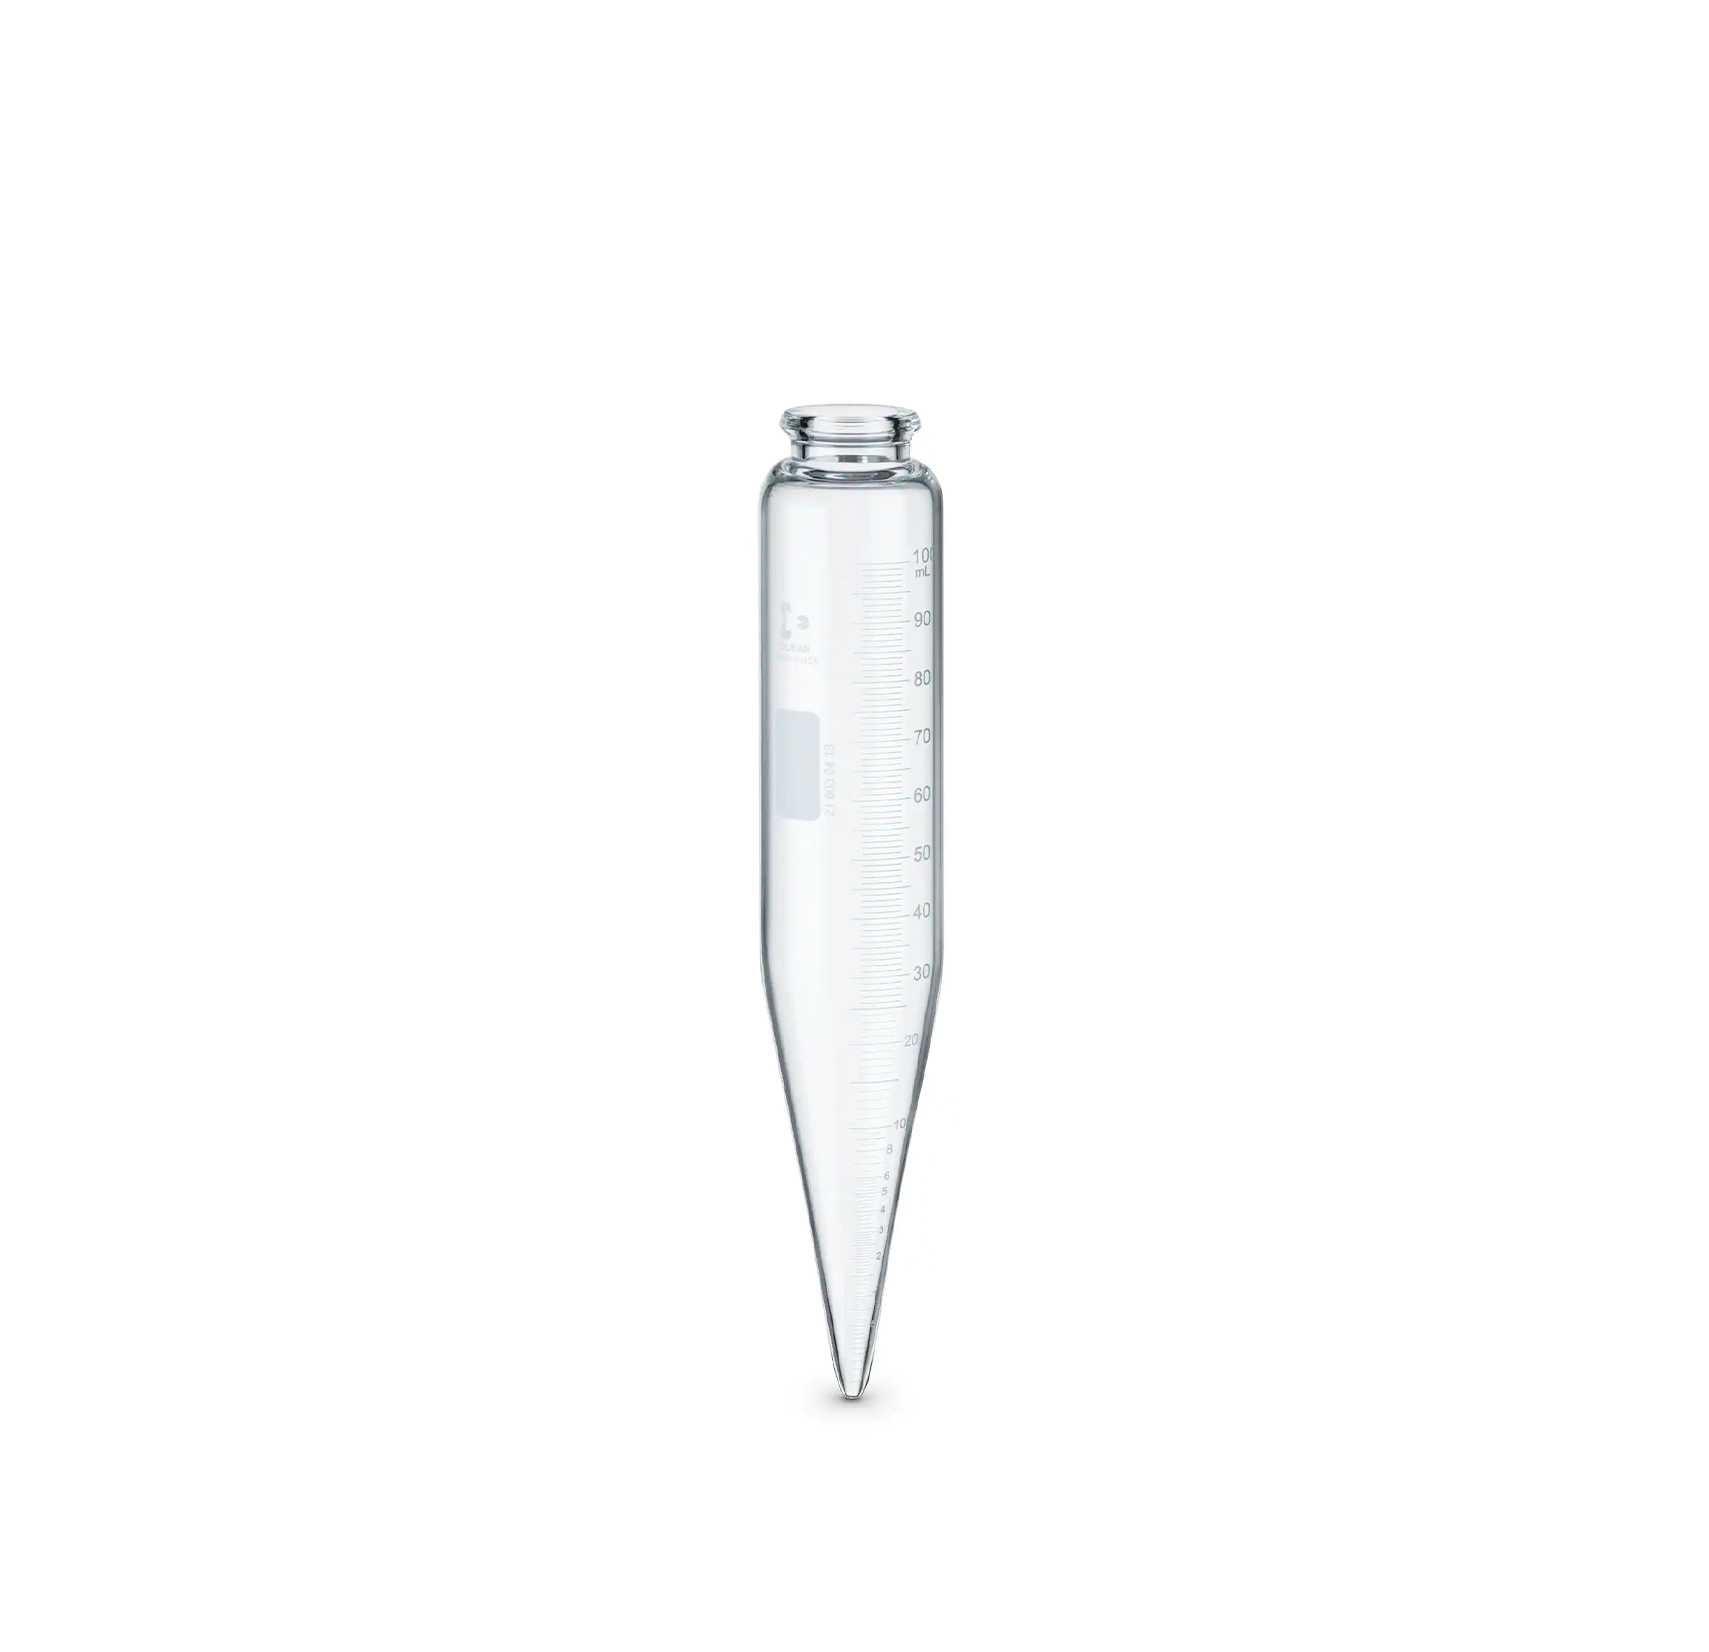 Tubo de ensayo 11 ml con tapón rosca, 16 x 100 mm – ELICROM